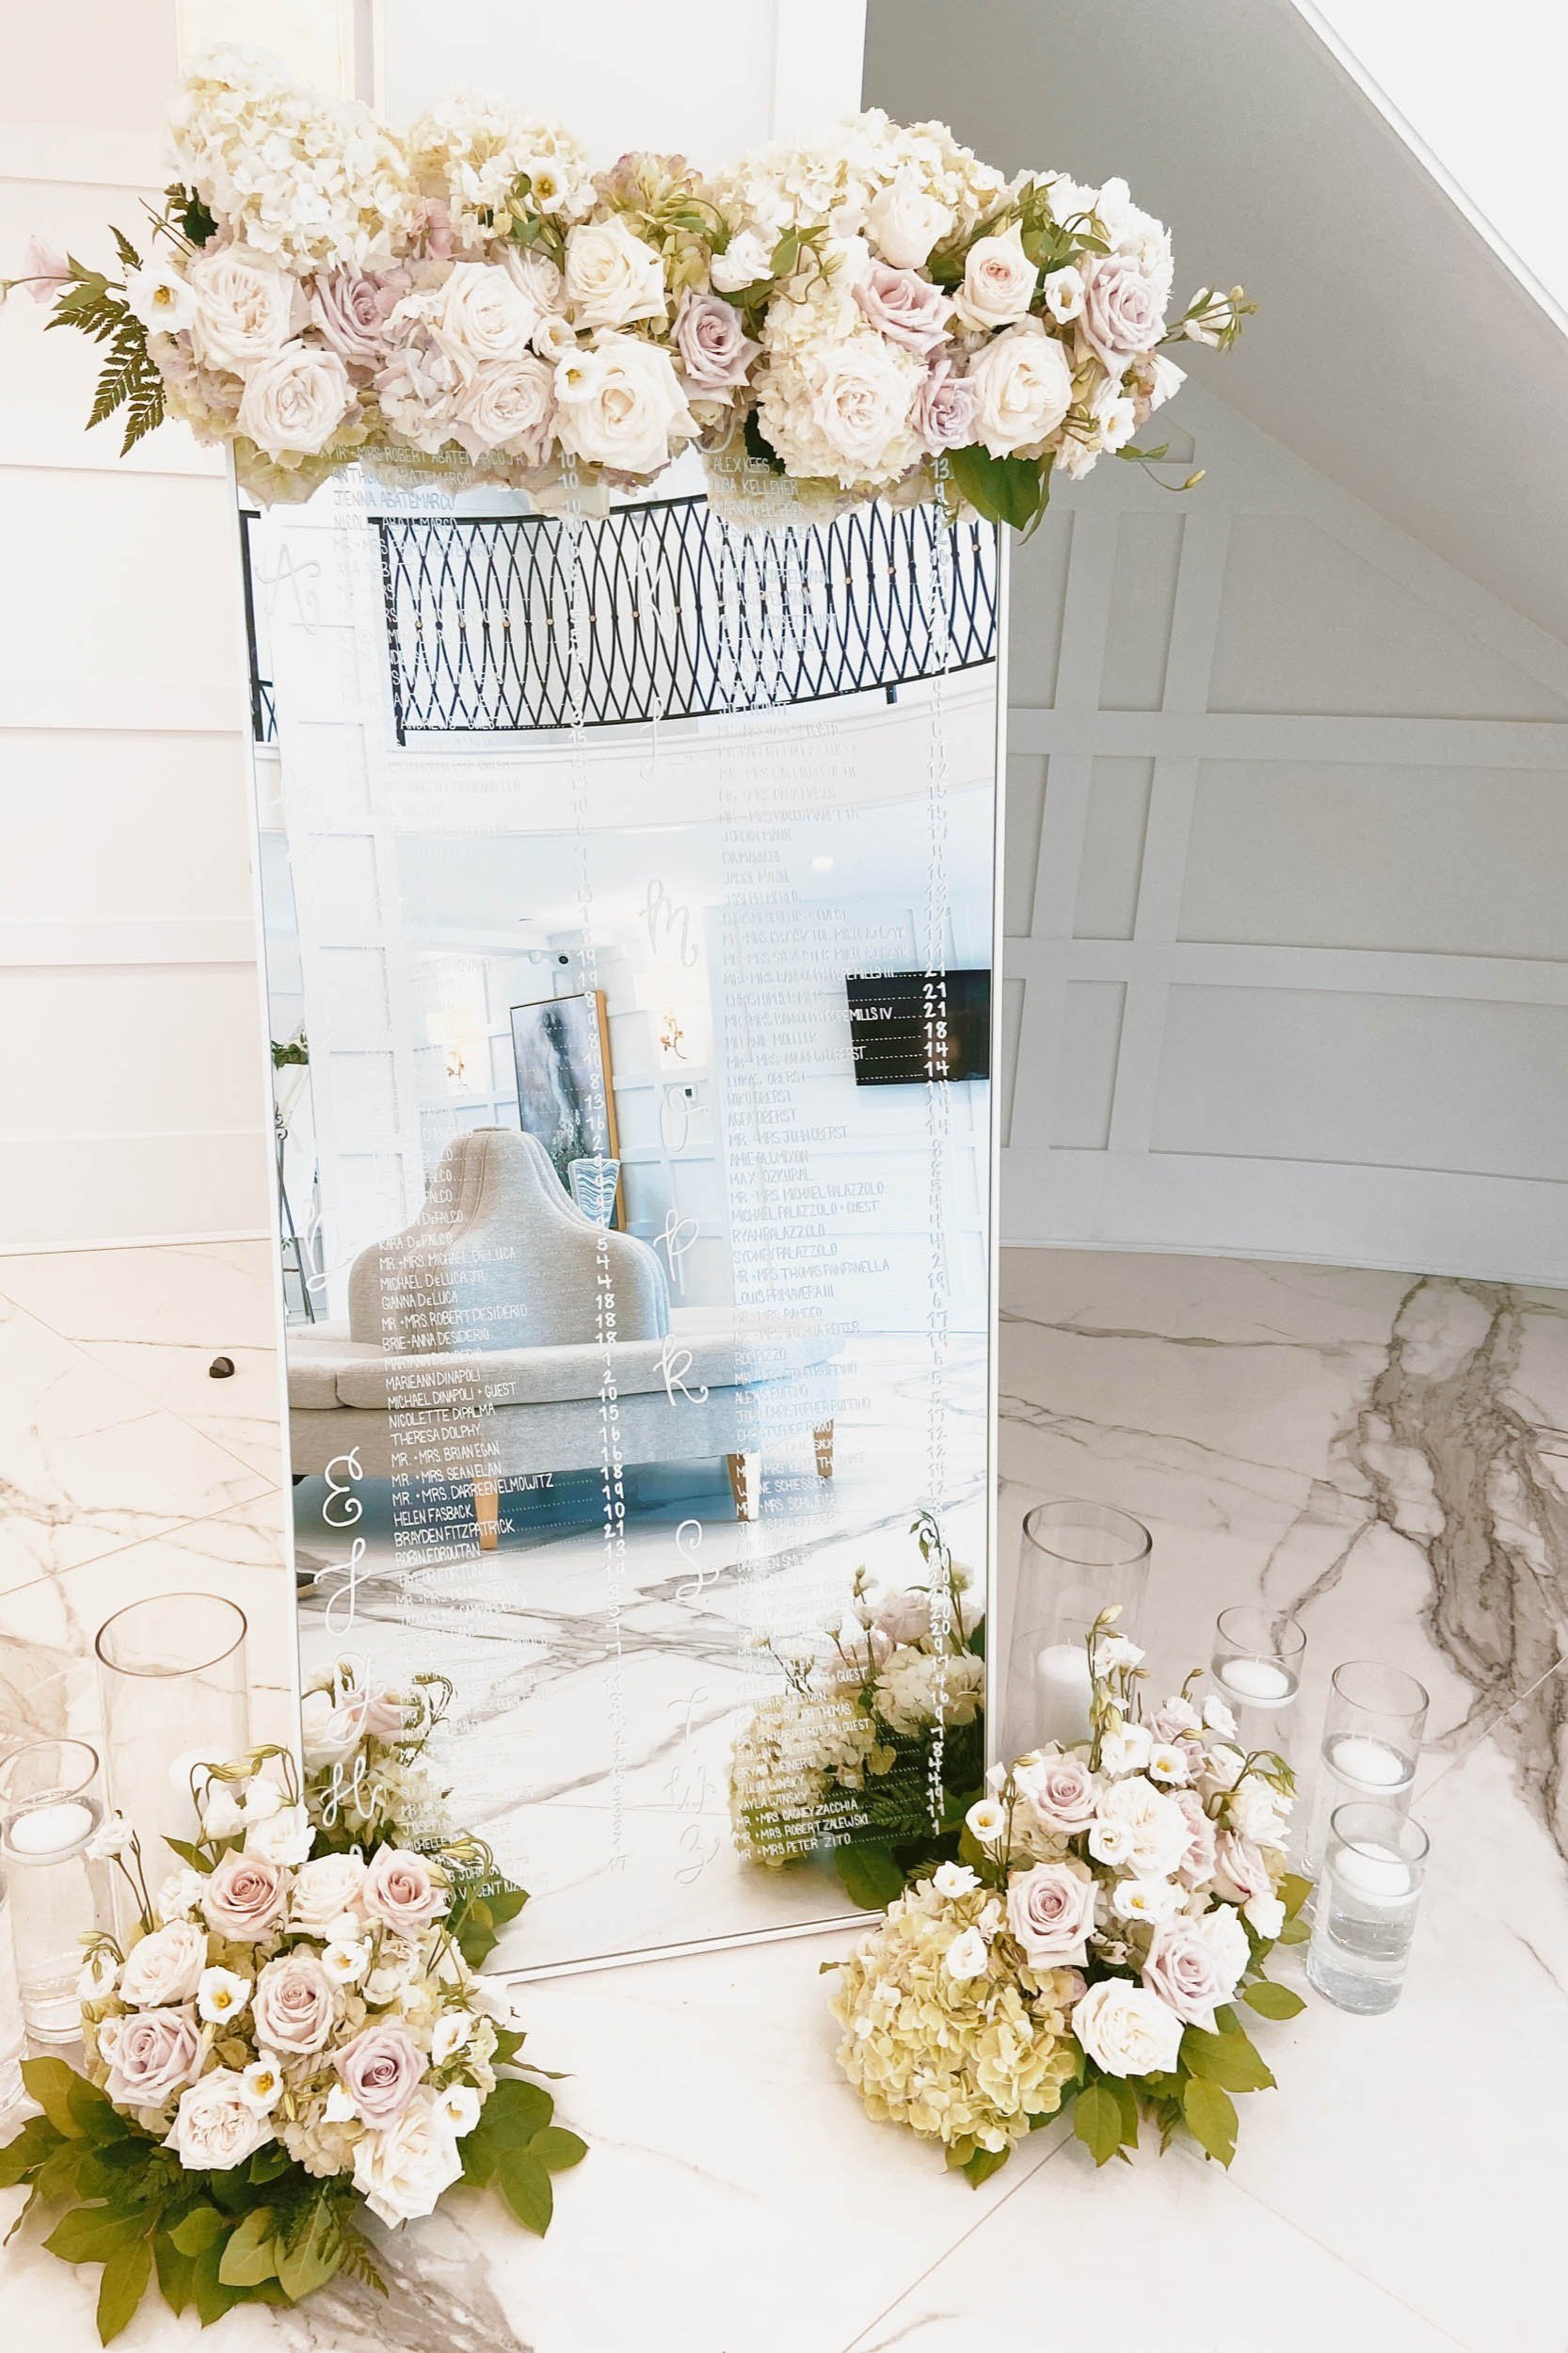 hengstenbergs-florist-weddings-love-story-brooke-andreas-06-low-quality.jpg